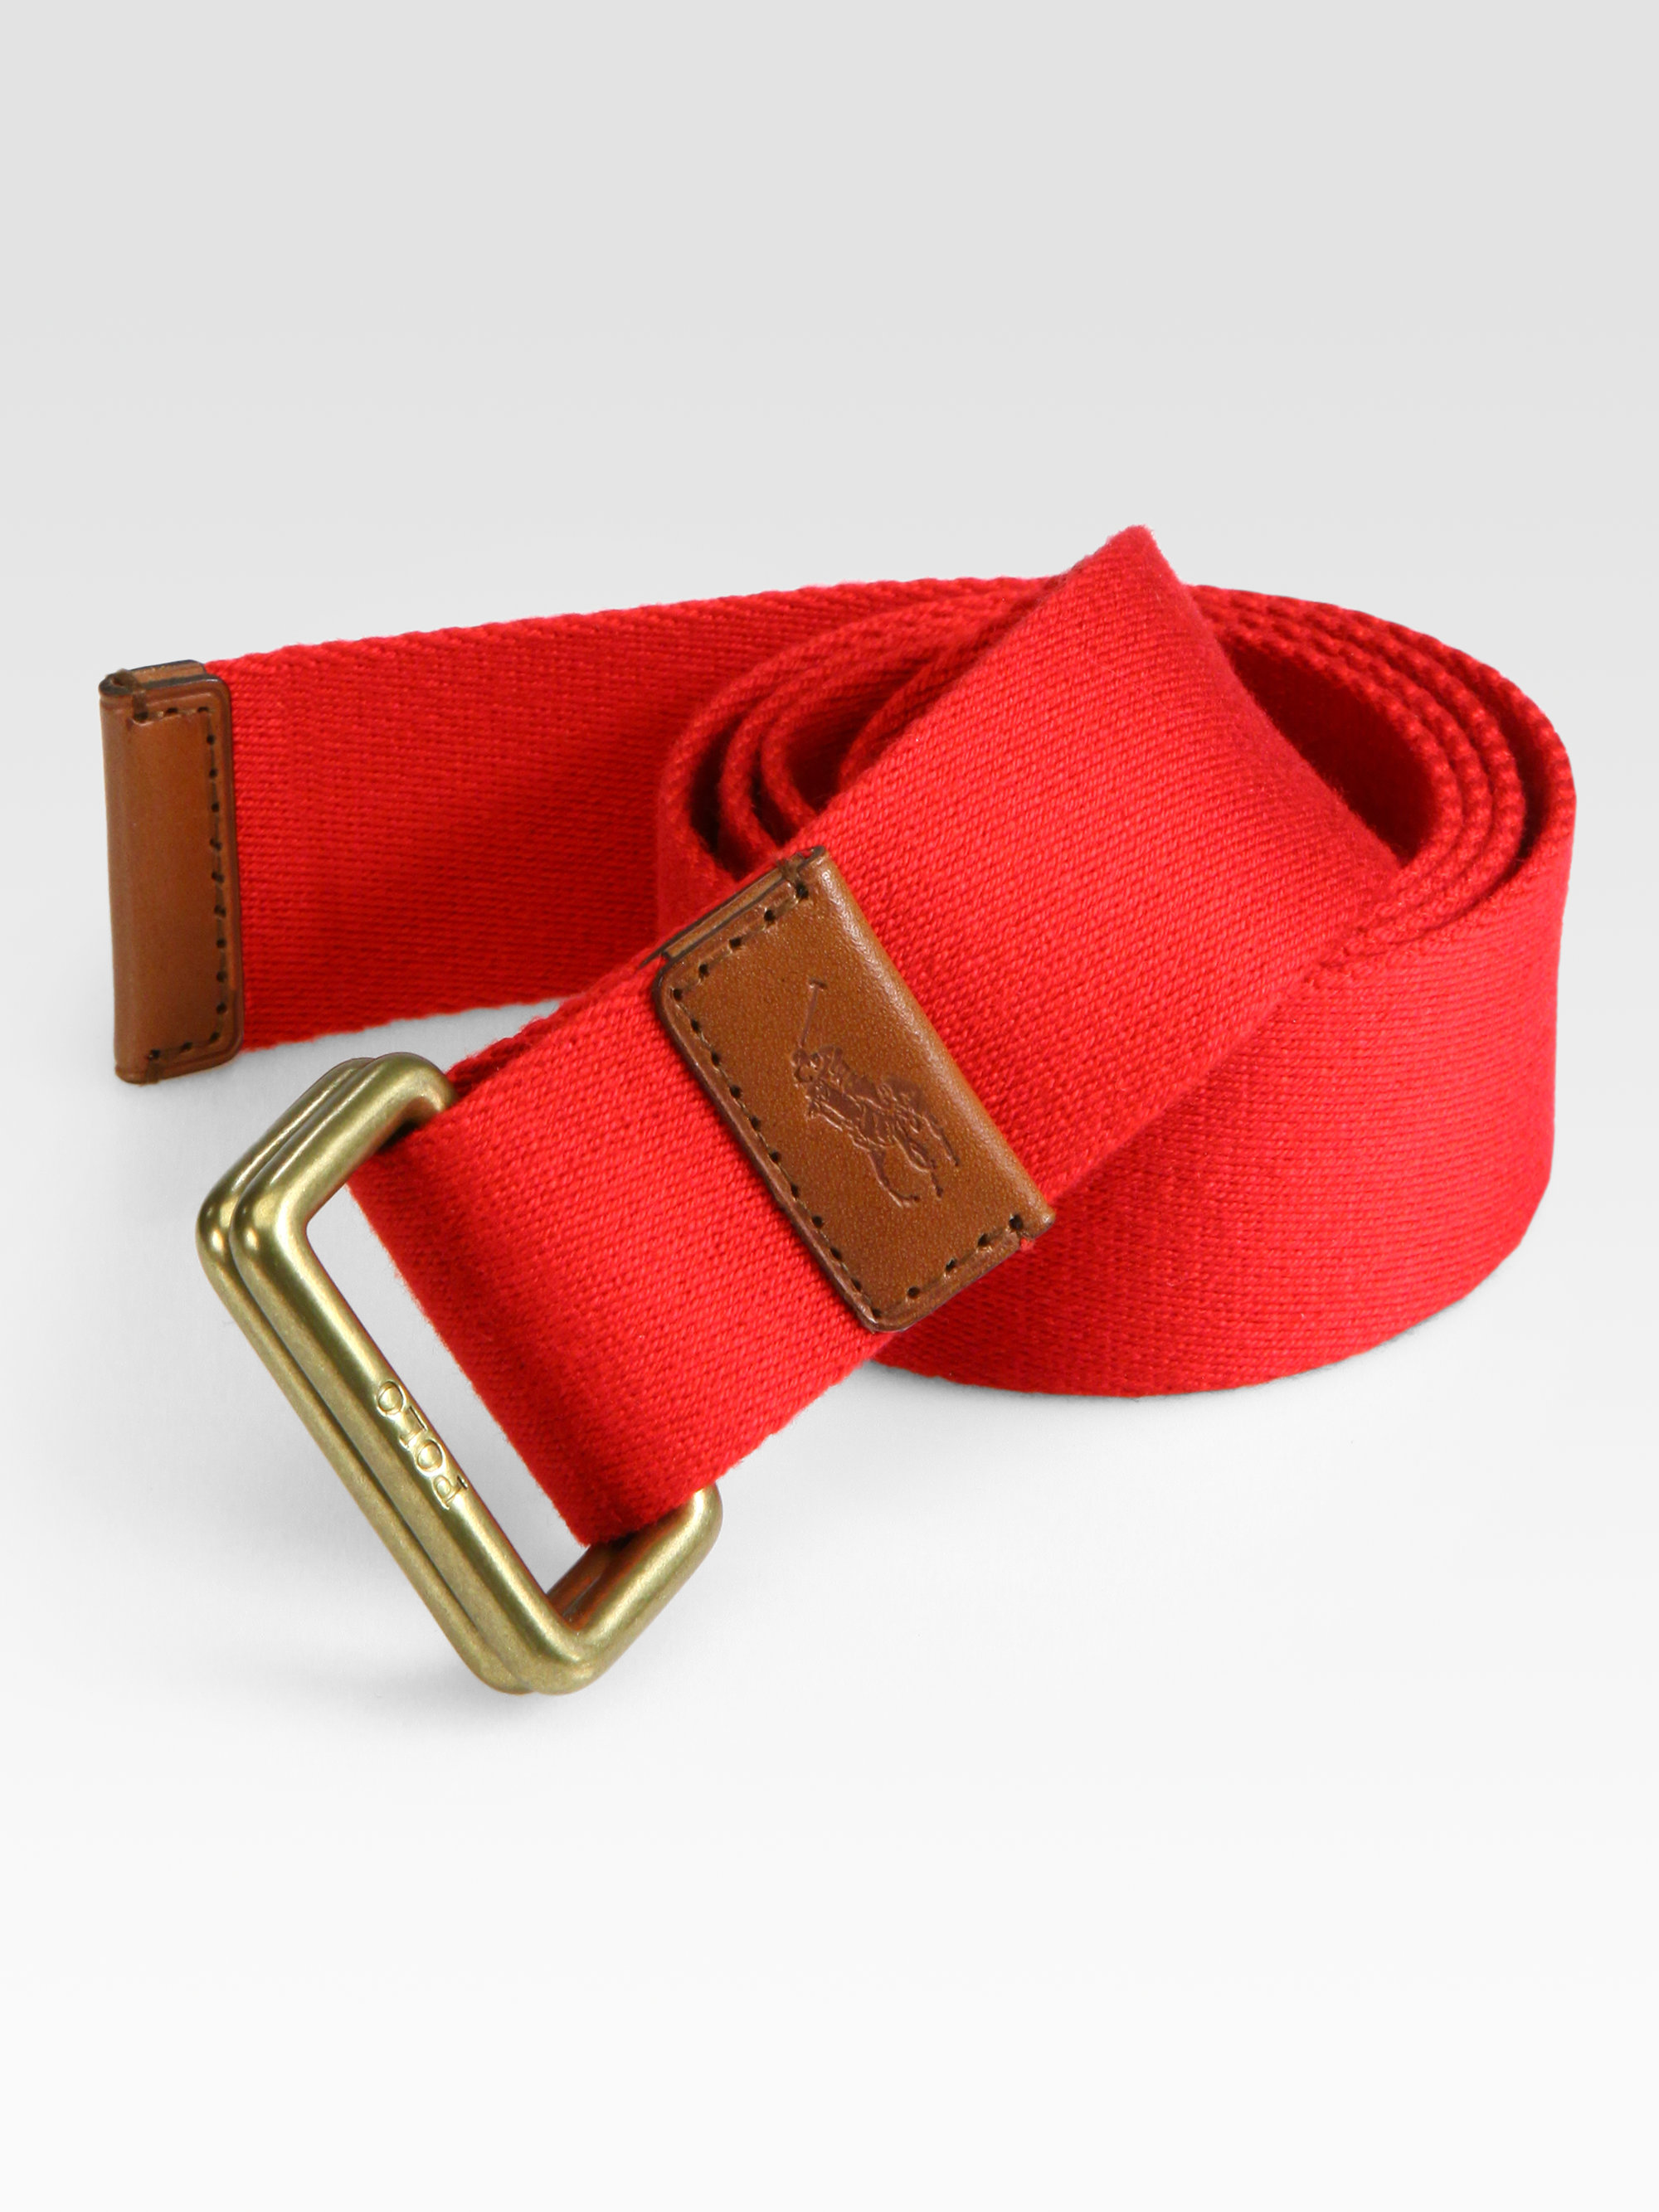 Polo Ralph Lauren Solid Web Belt in Red 